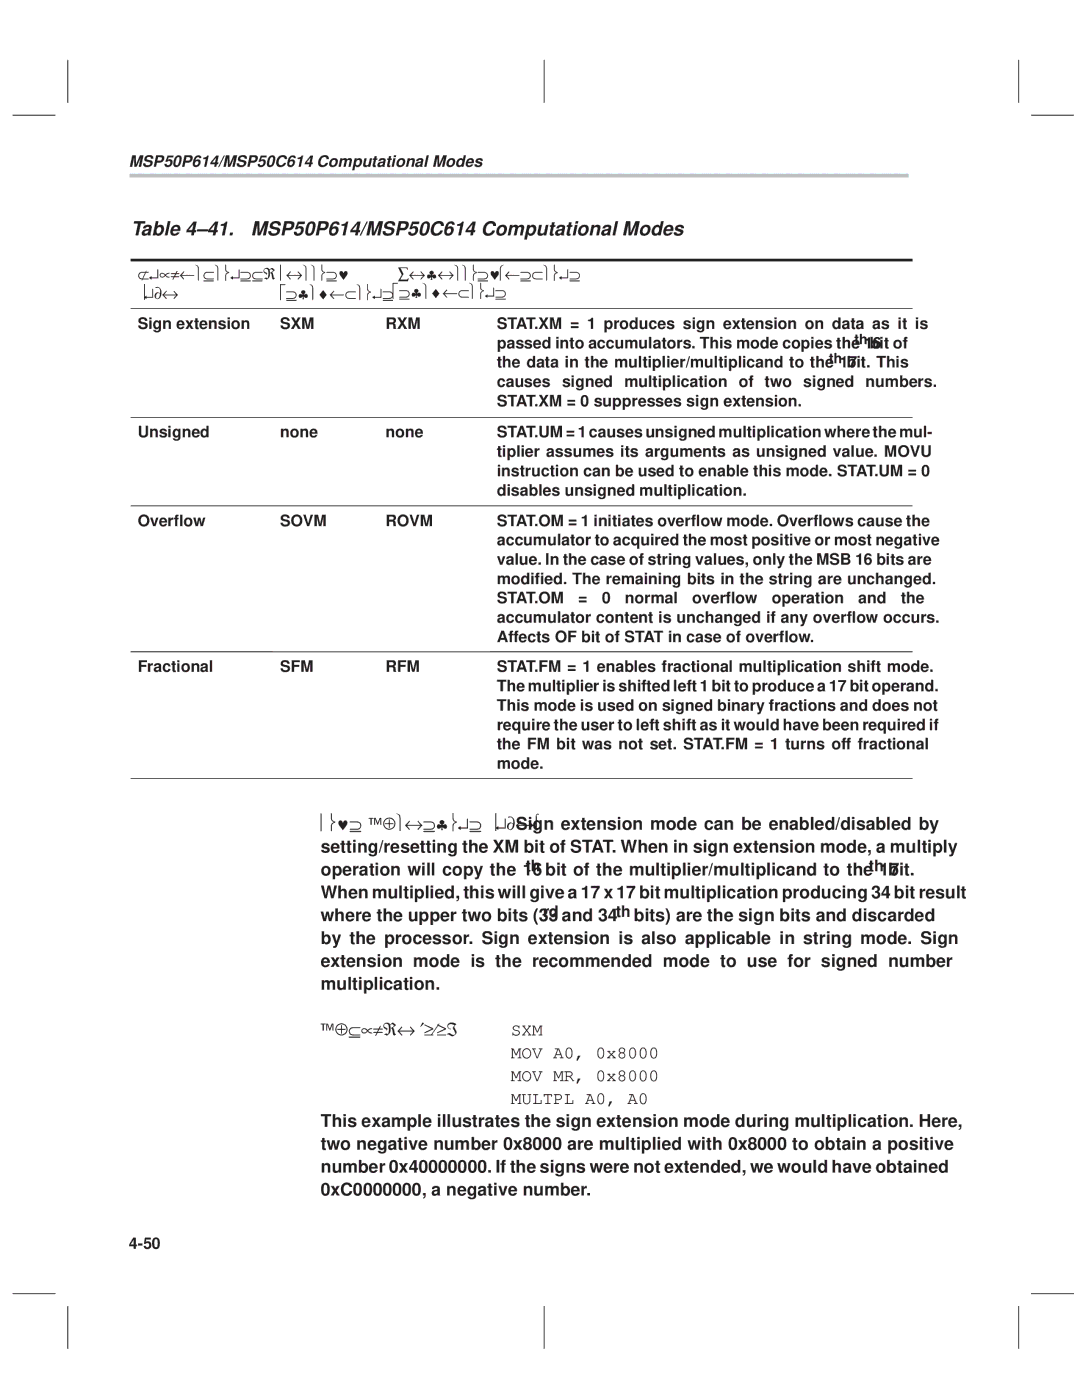 Texas Instruments manual ±41. MSP50P614/MSP50C614 Computational Modes 